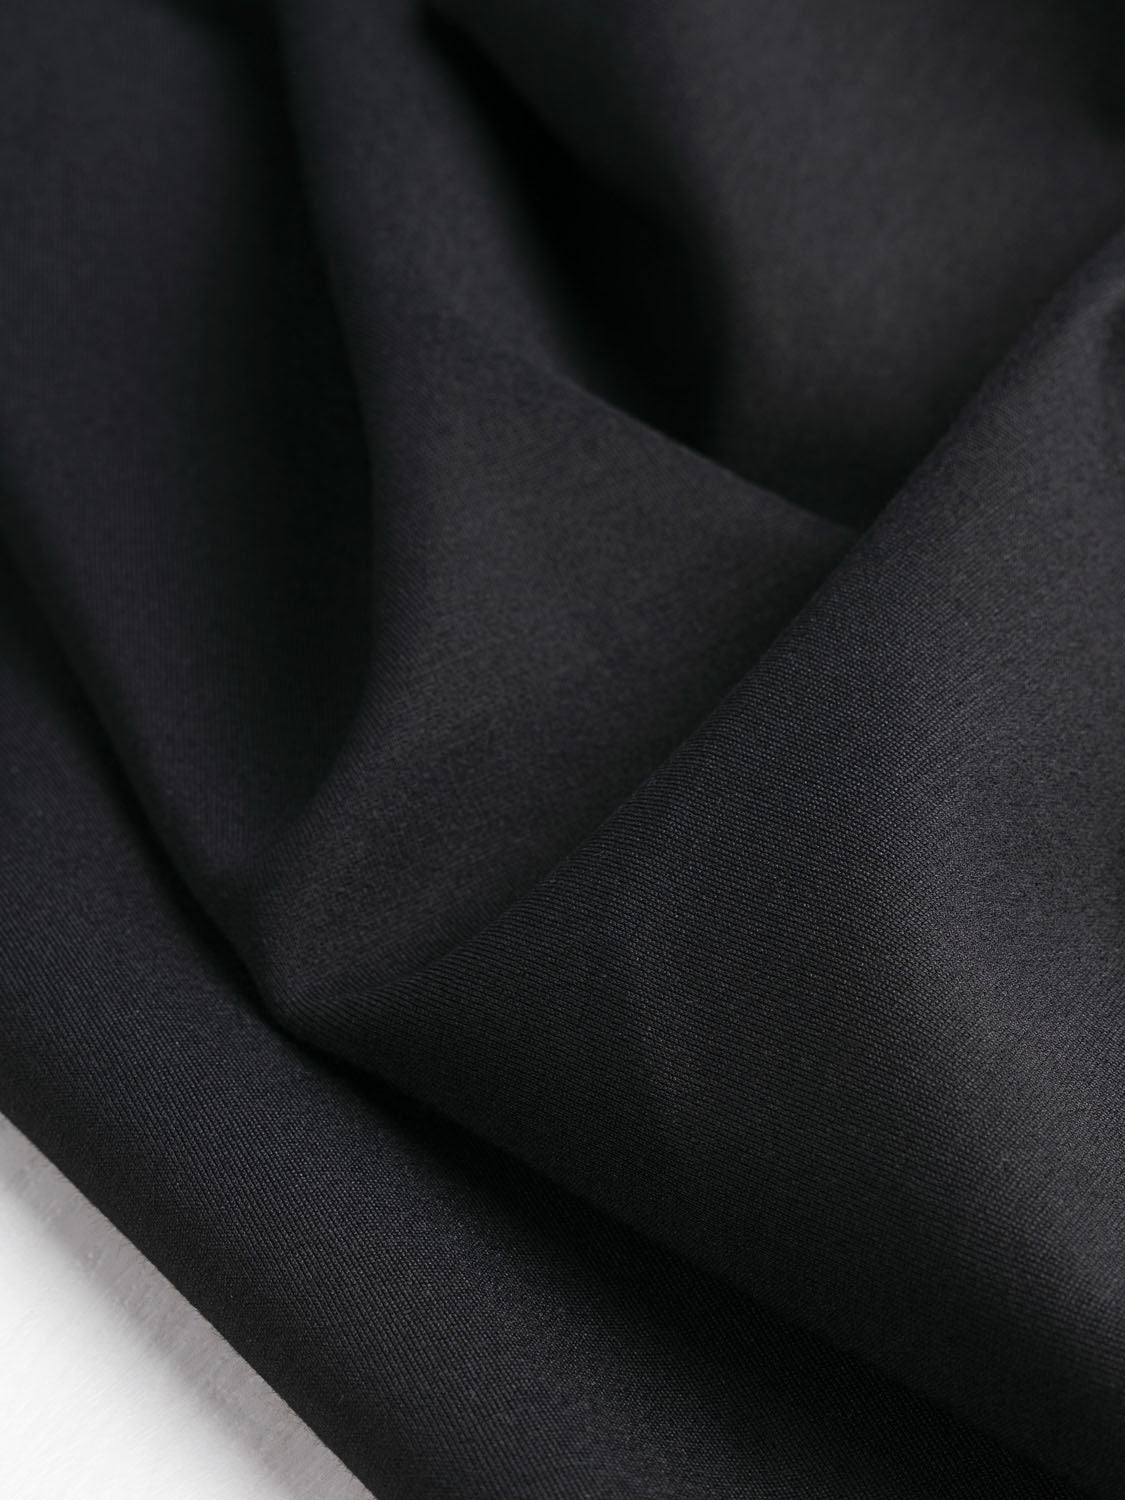 Jacquard Ponte Knit / Black / Garment Fabric